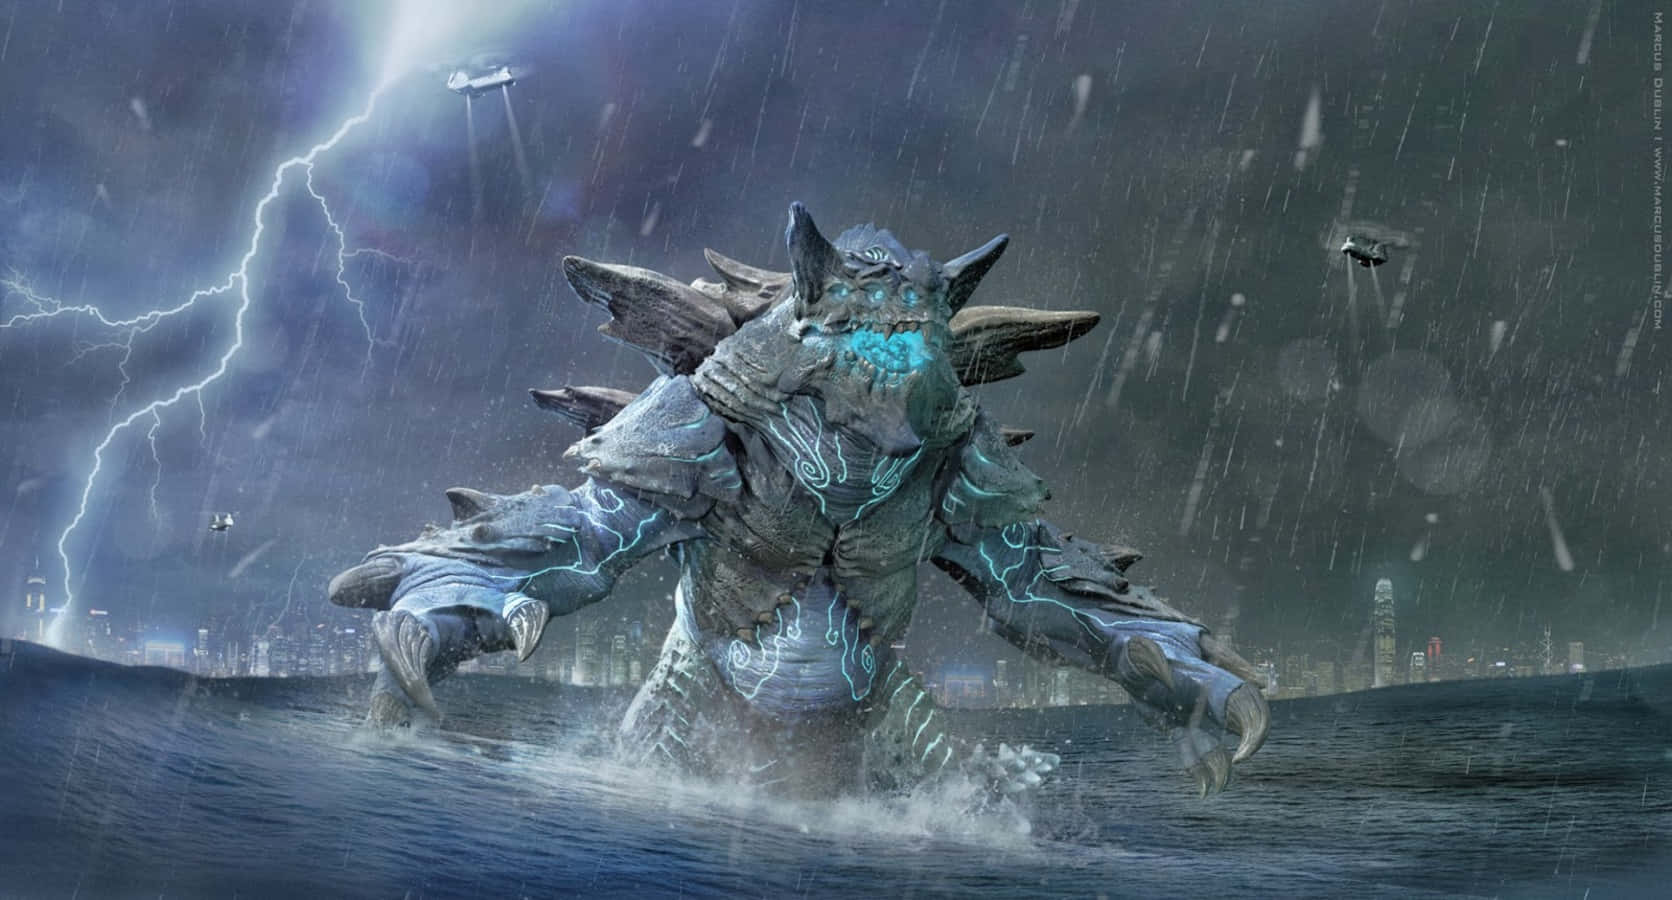 Caption: Monstrous Kaiju Battle In The City Background